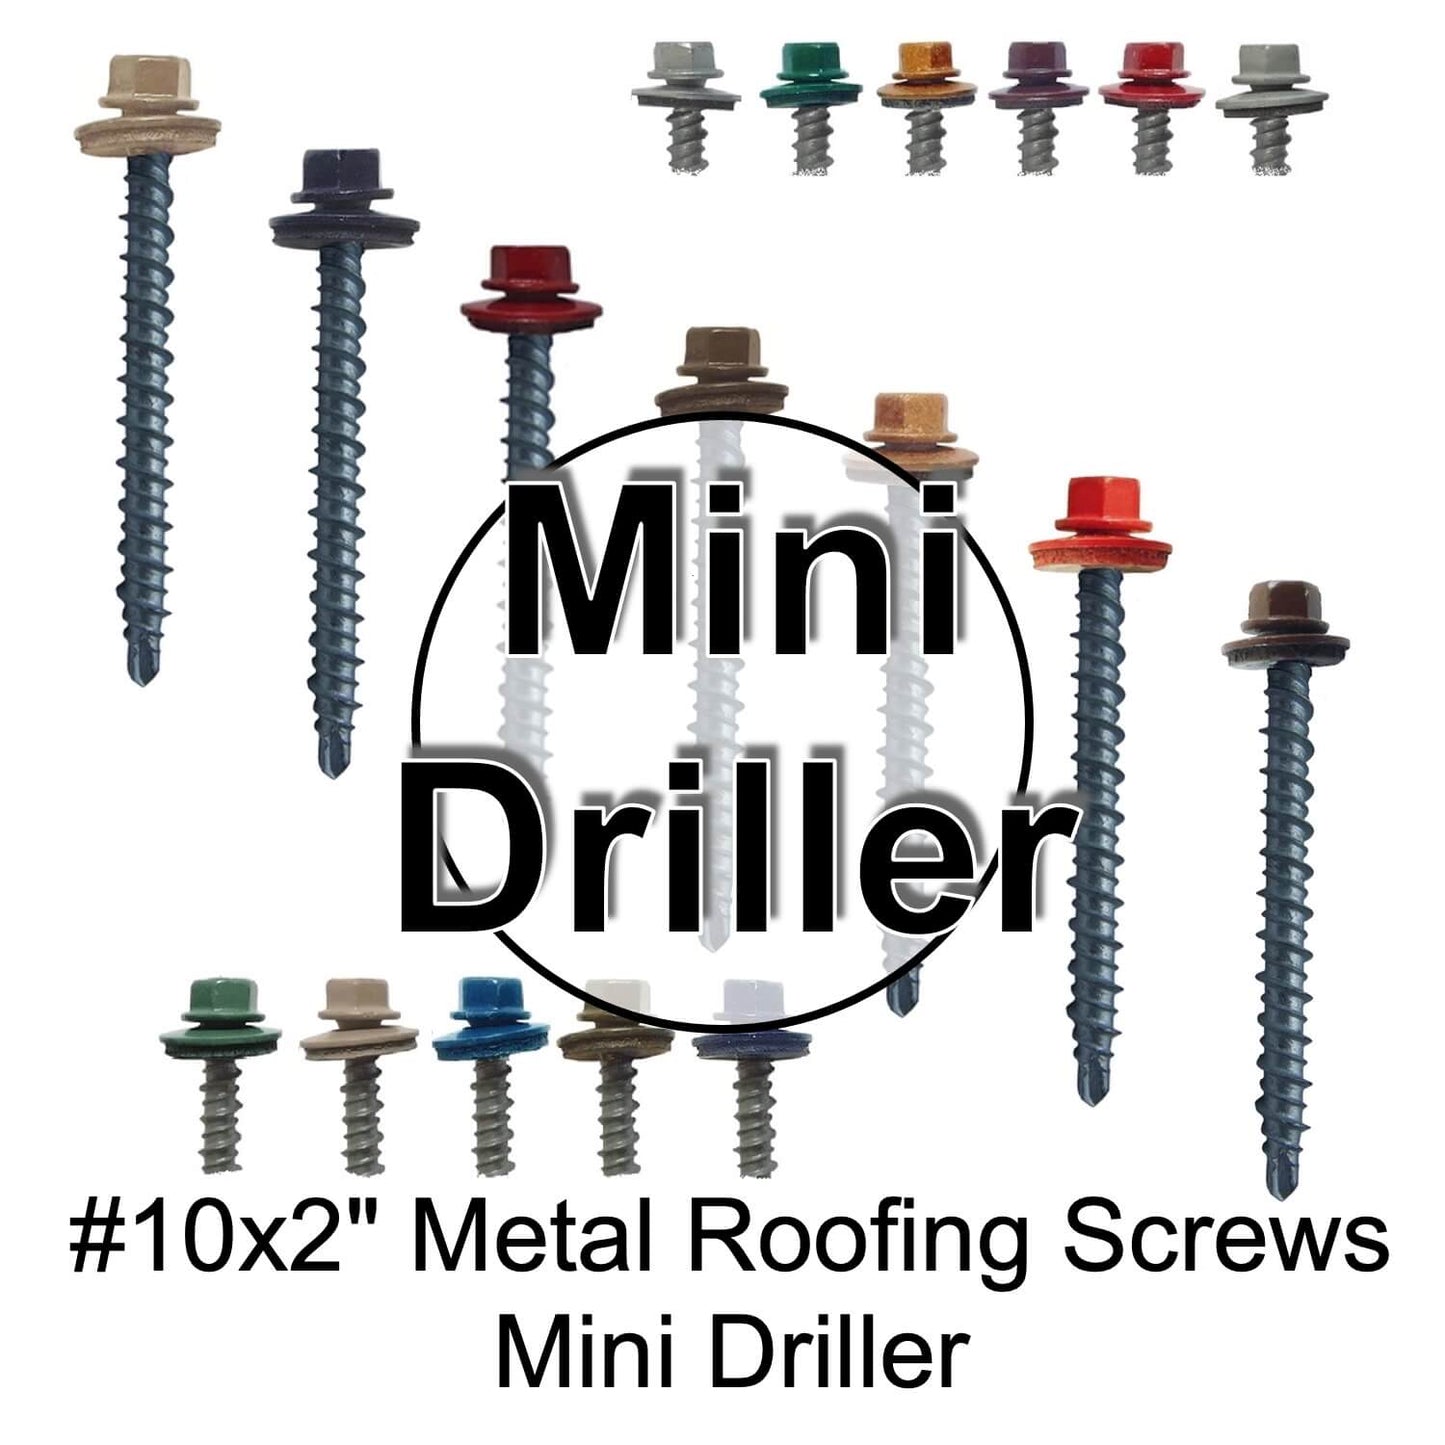 10 x 2"  Metal ROOFING SCREWS: (250) Hex Head Mini Driller Sheet Metal Roof Screw. Self starting metal to wood siding screws. EPDM washer.